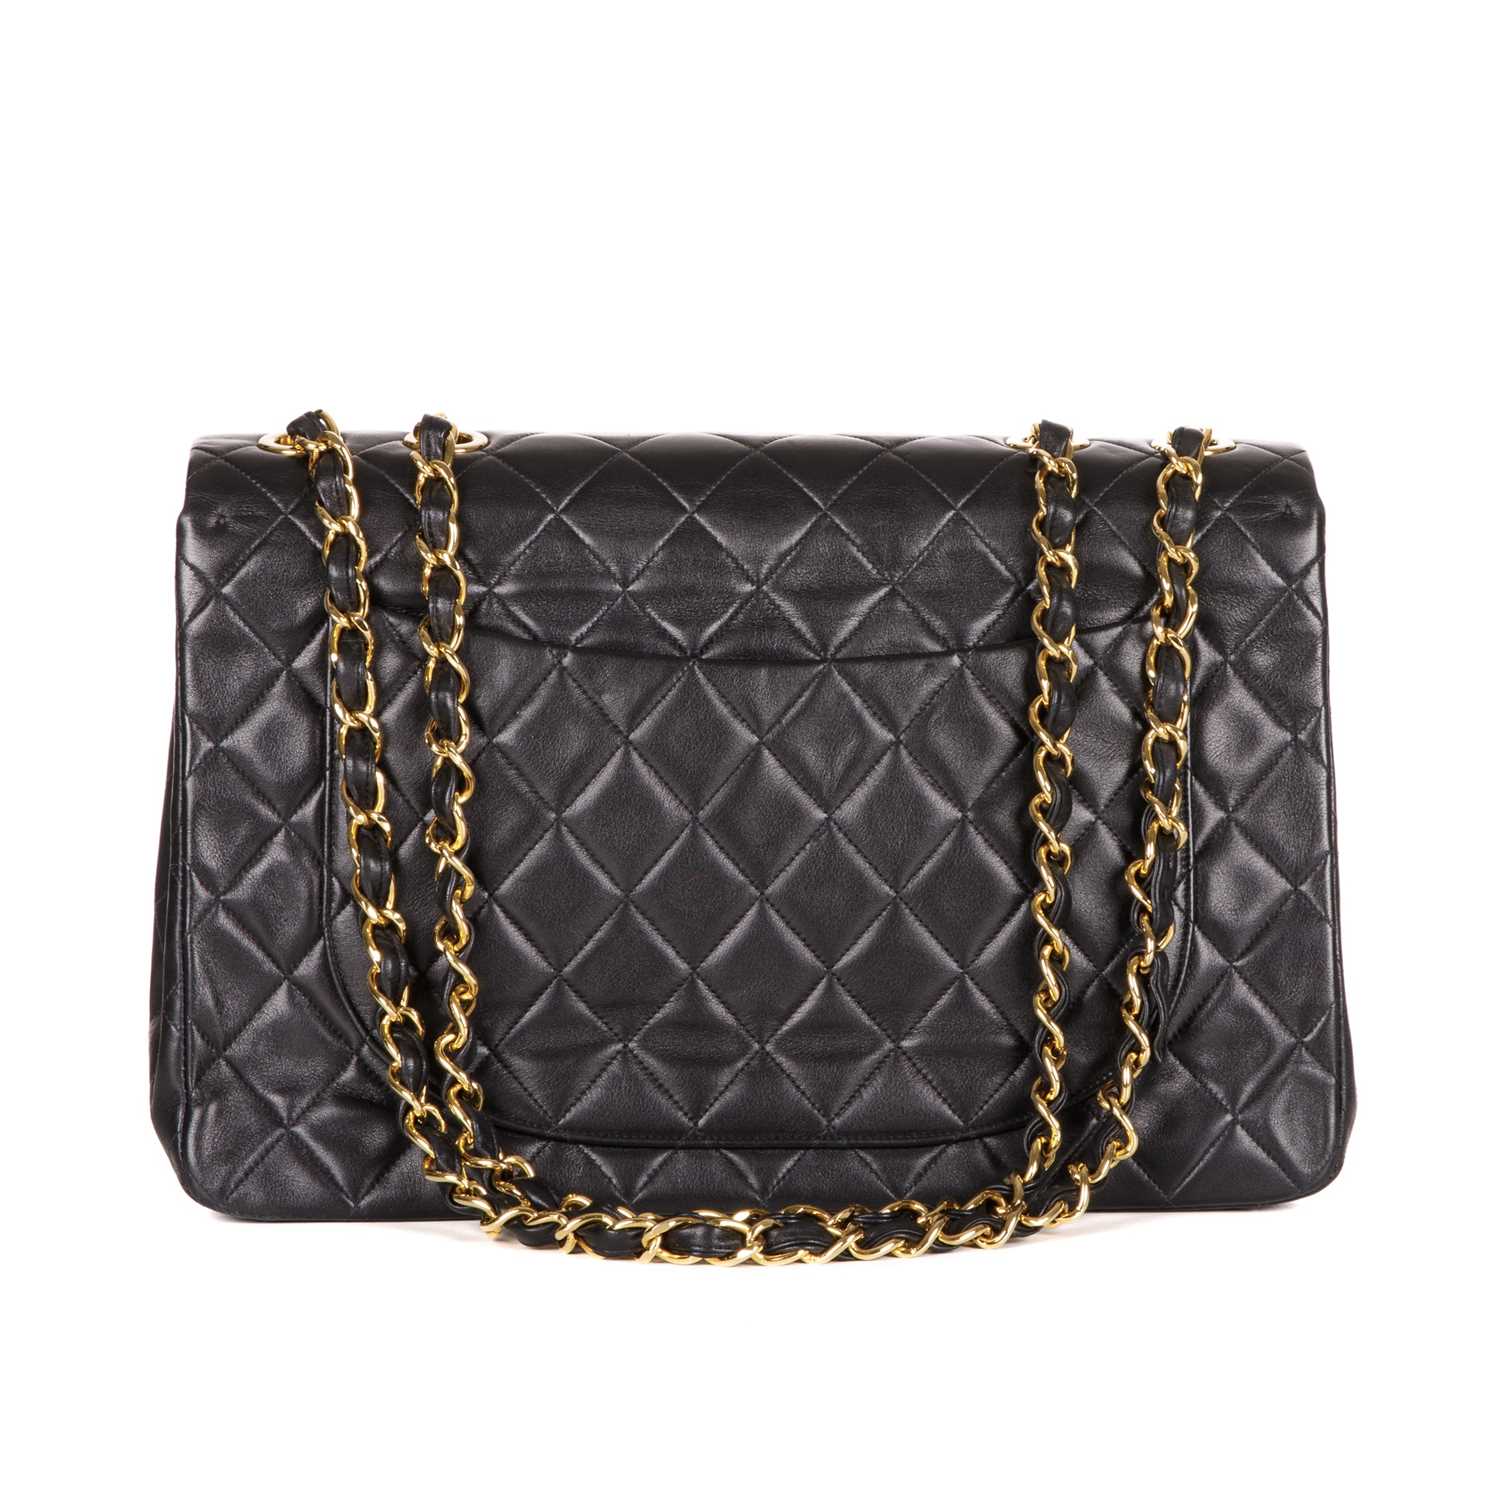 Chanel, a vintage Maxi Single Flap handbag, designed with a diamond quilted black leather - Bild 2 aus 4